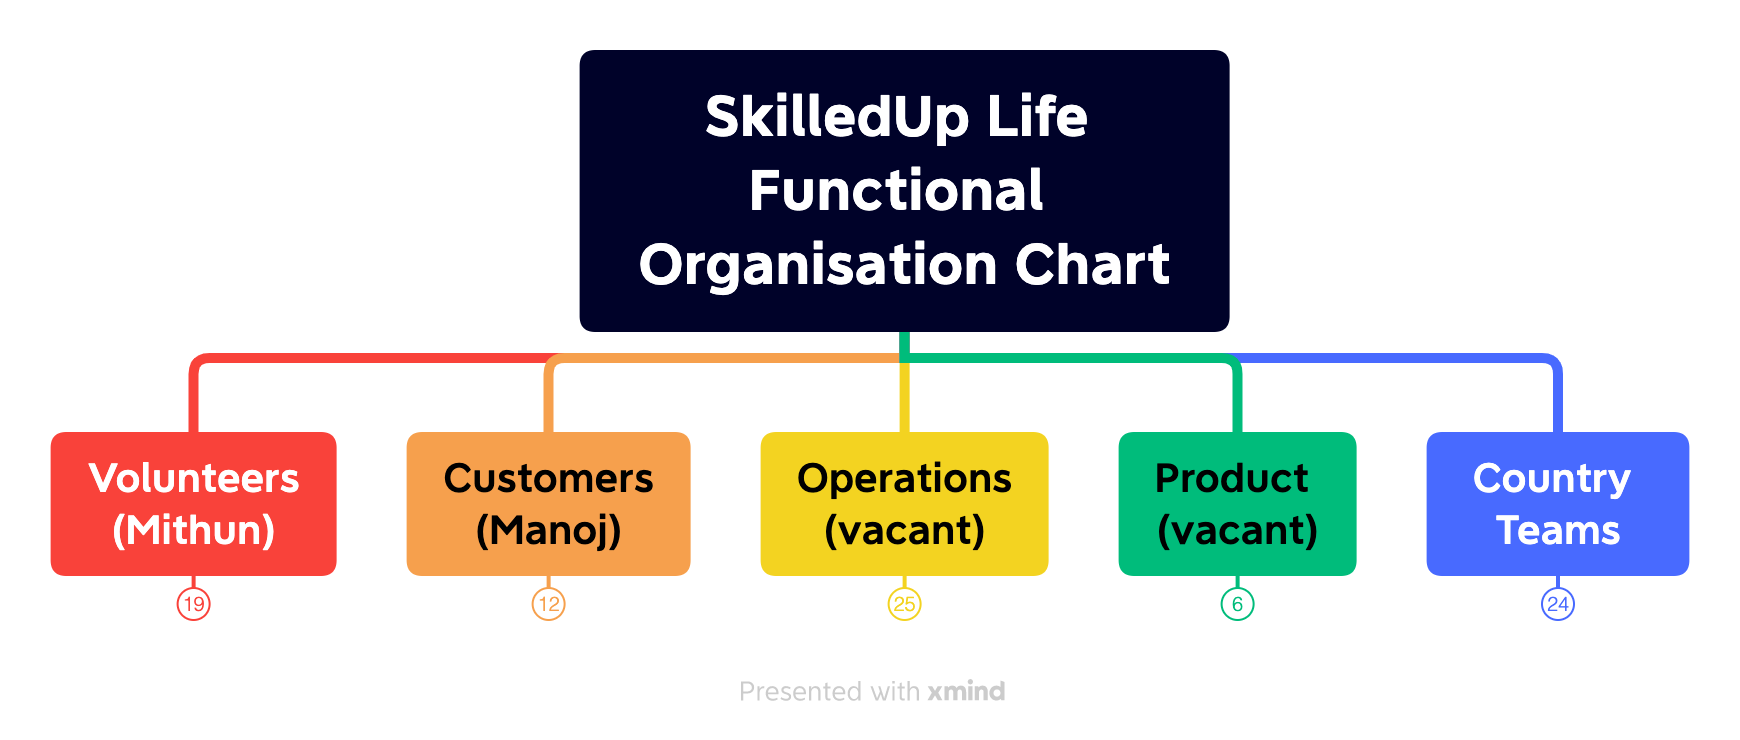 SkilledUp Life Functional Organisation Chart